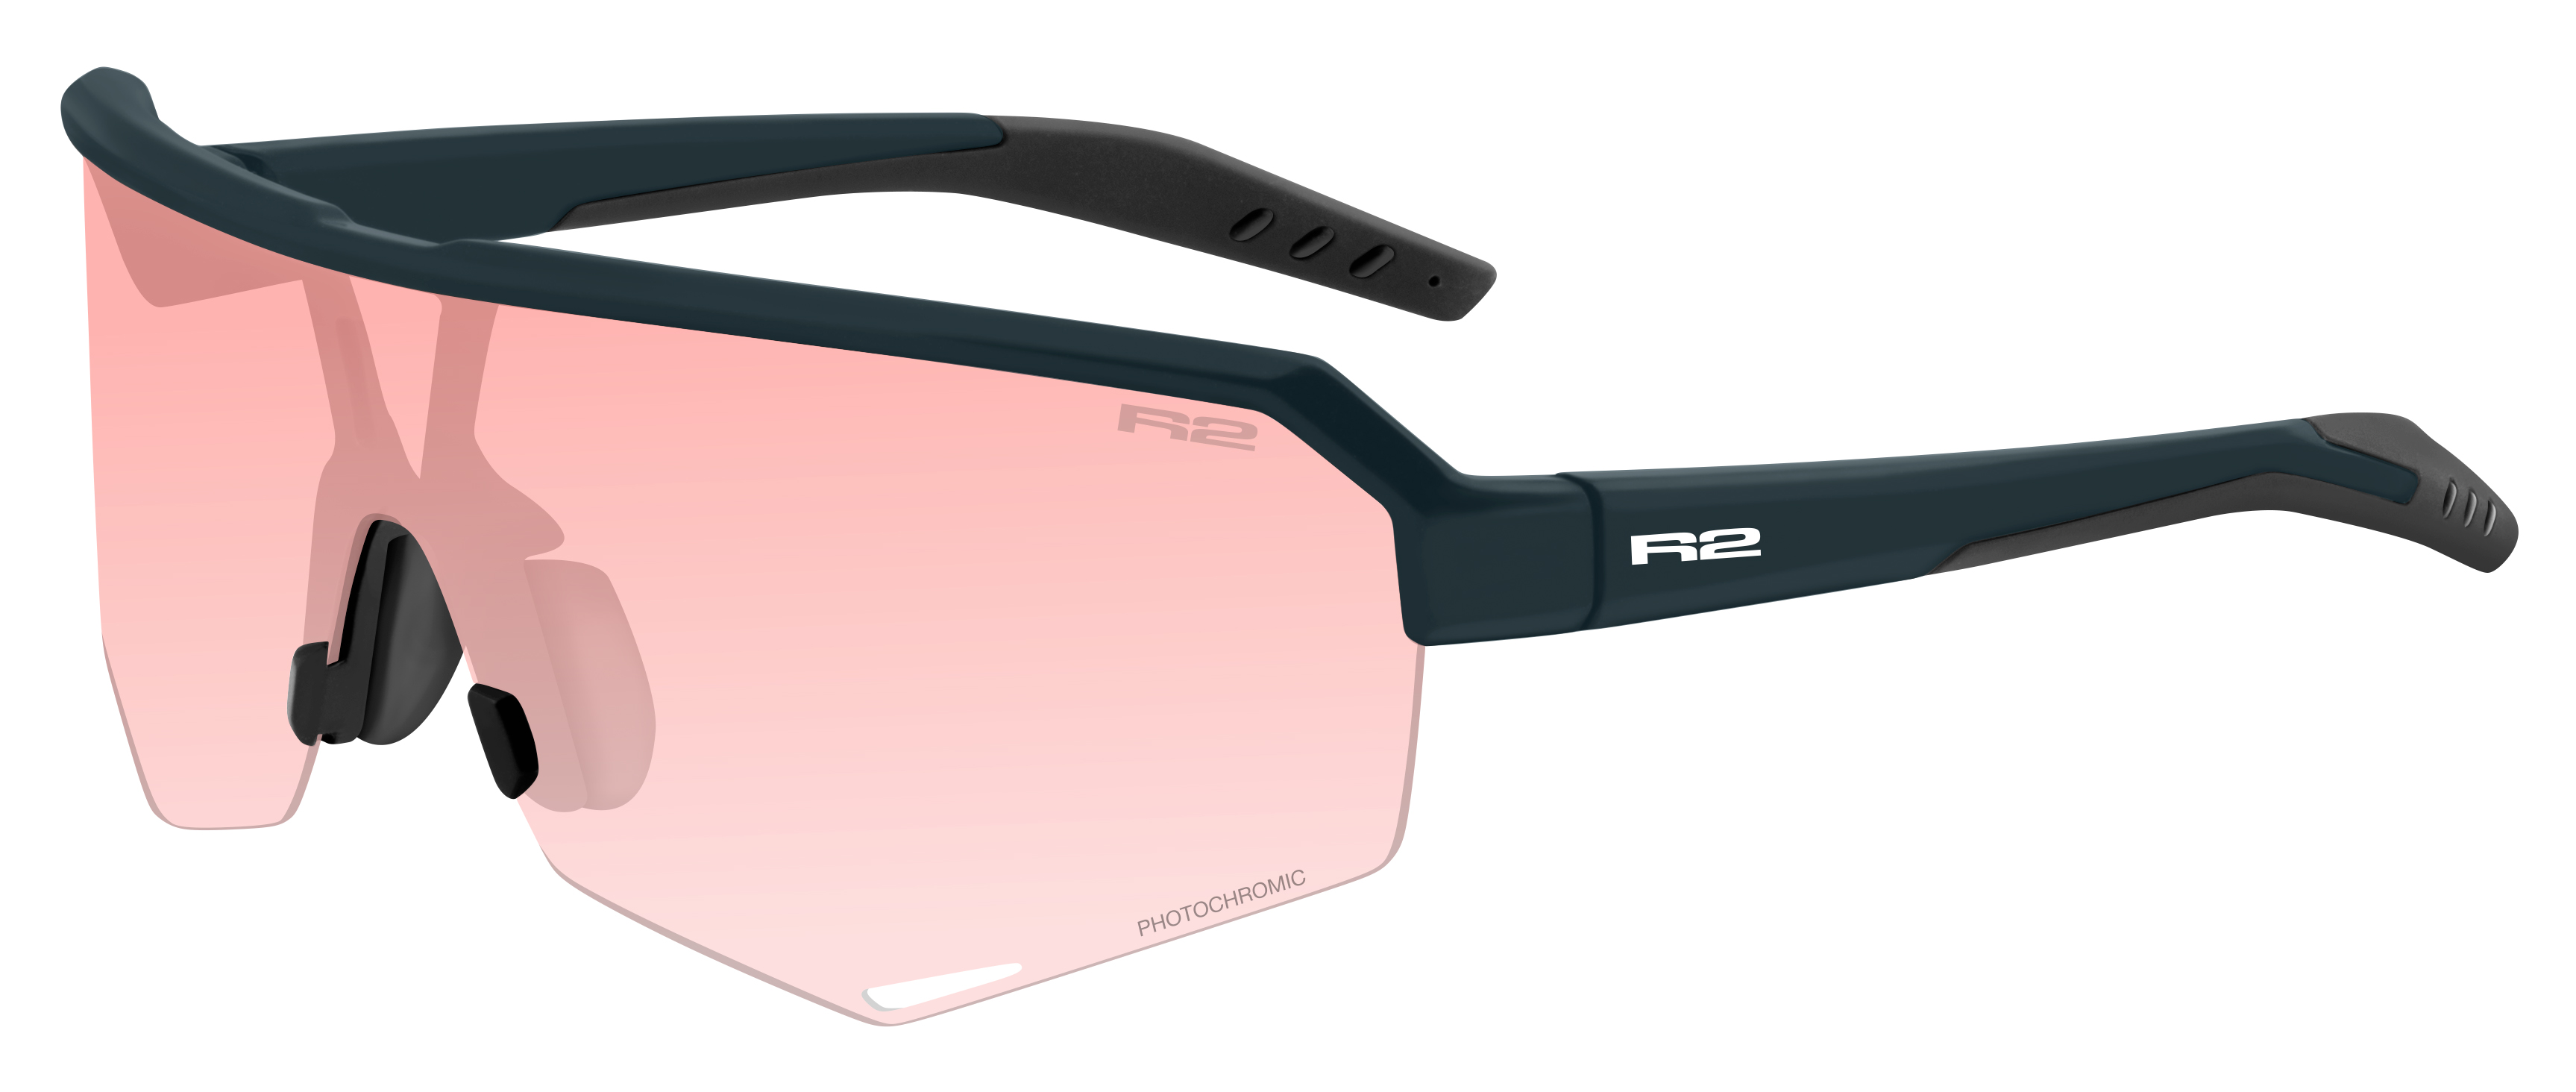 Photochromatic sunglasses  R2 FLUKE AT100J standard